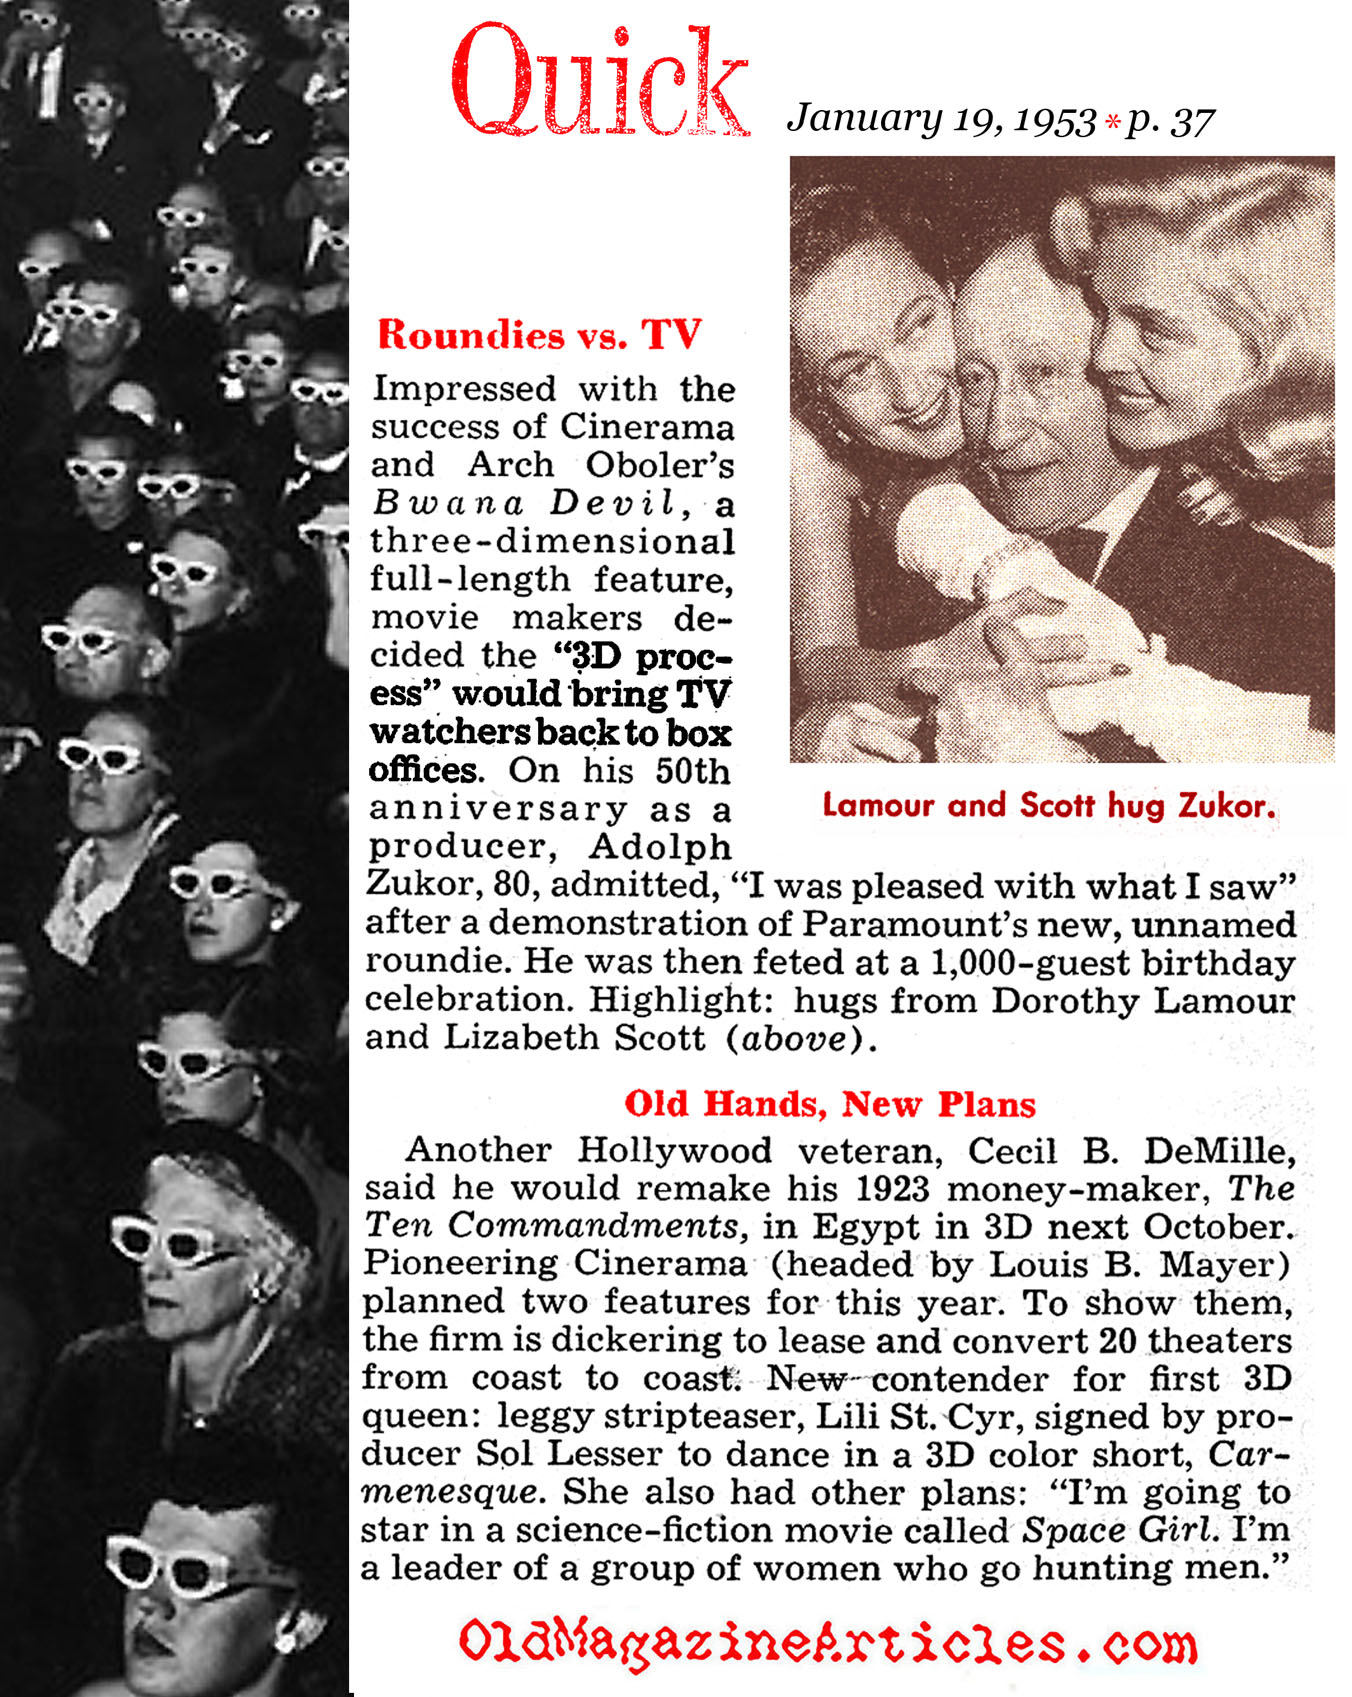 3-D Movies Arrive (Quick Magazine, 1953)